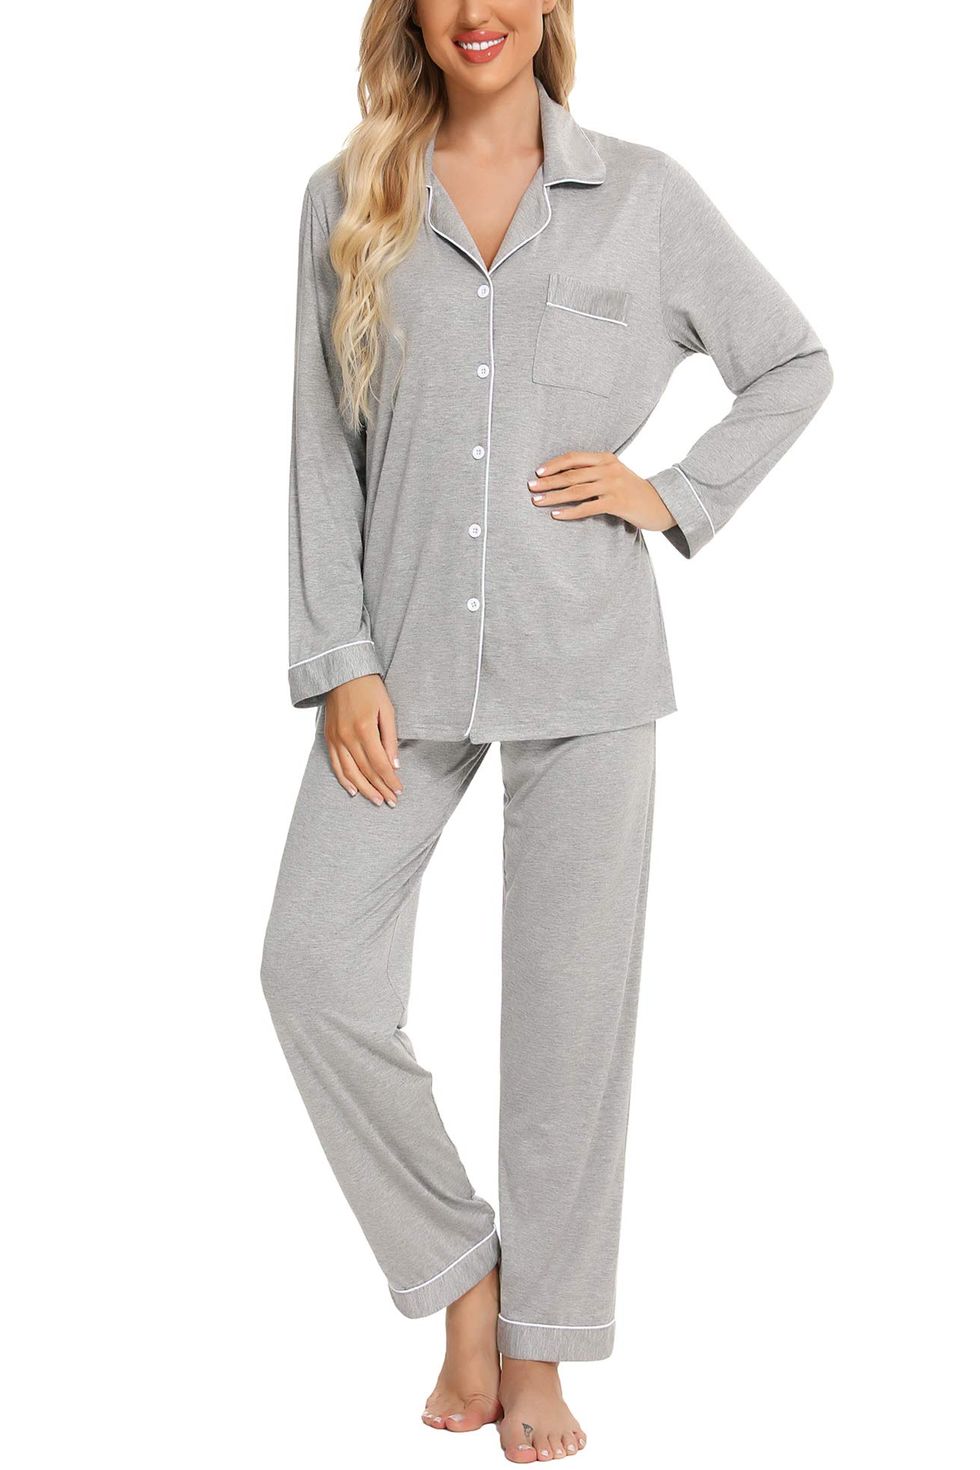 Pima Cotton Women's Pajamas, Incredibly Soft & Cozy, Long & Plus Sizes  Too